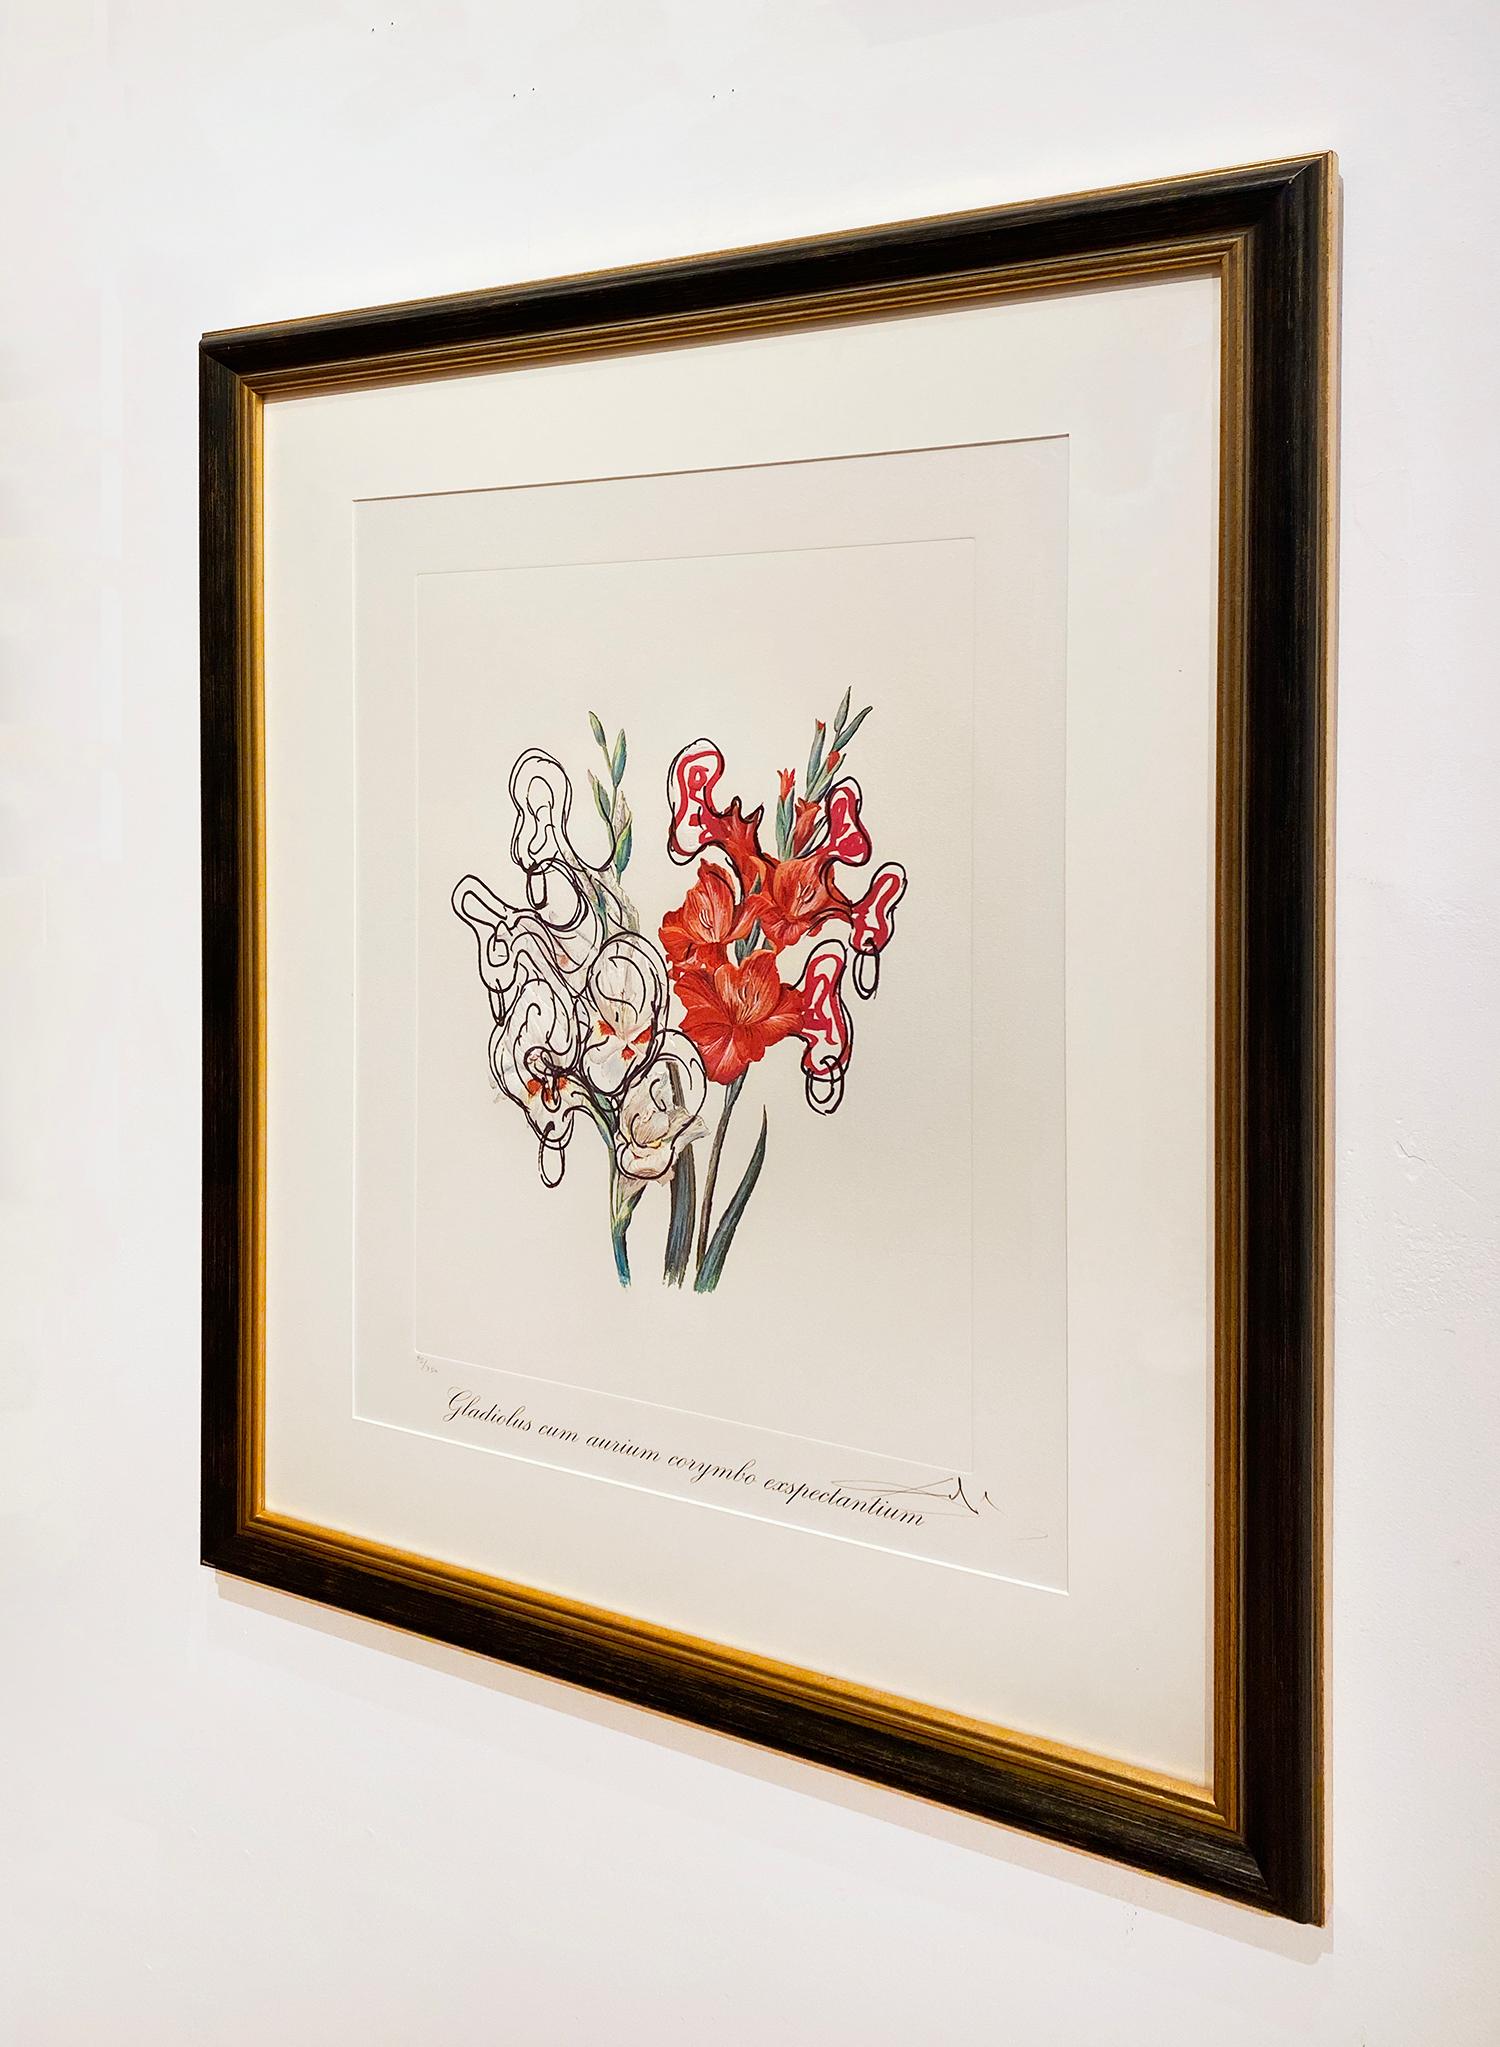 Gladiolus Cum Aurium Corymbo Expentantium (Pirate’s Gladioli) - Surrealist Print by Salvador Dalí